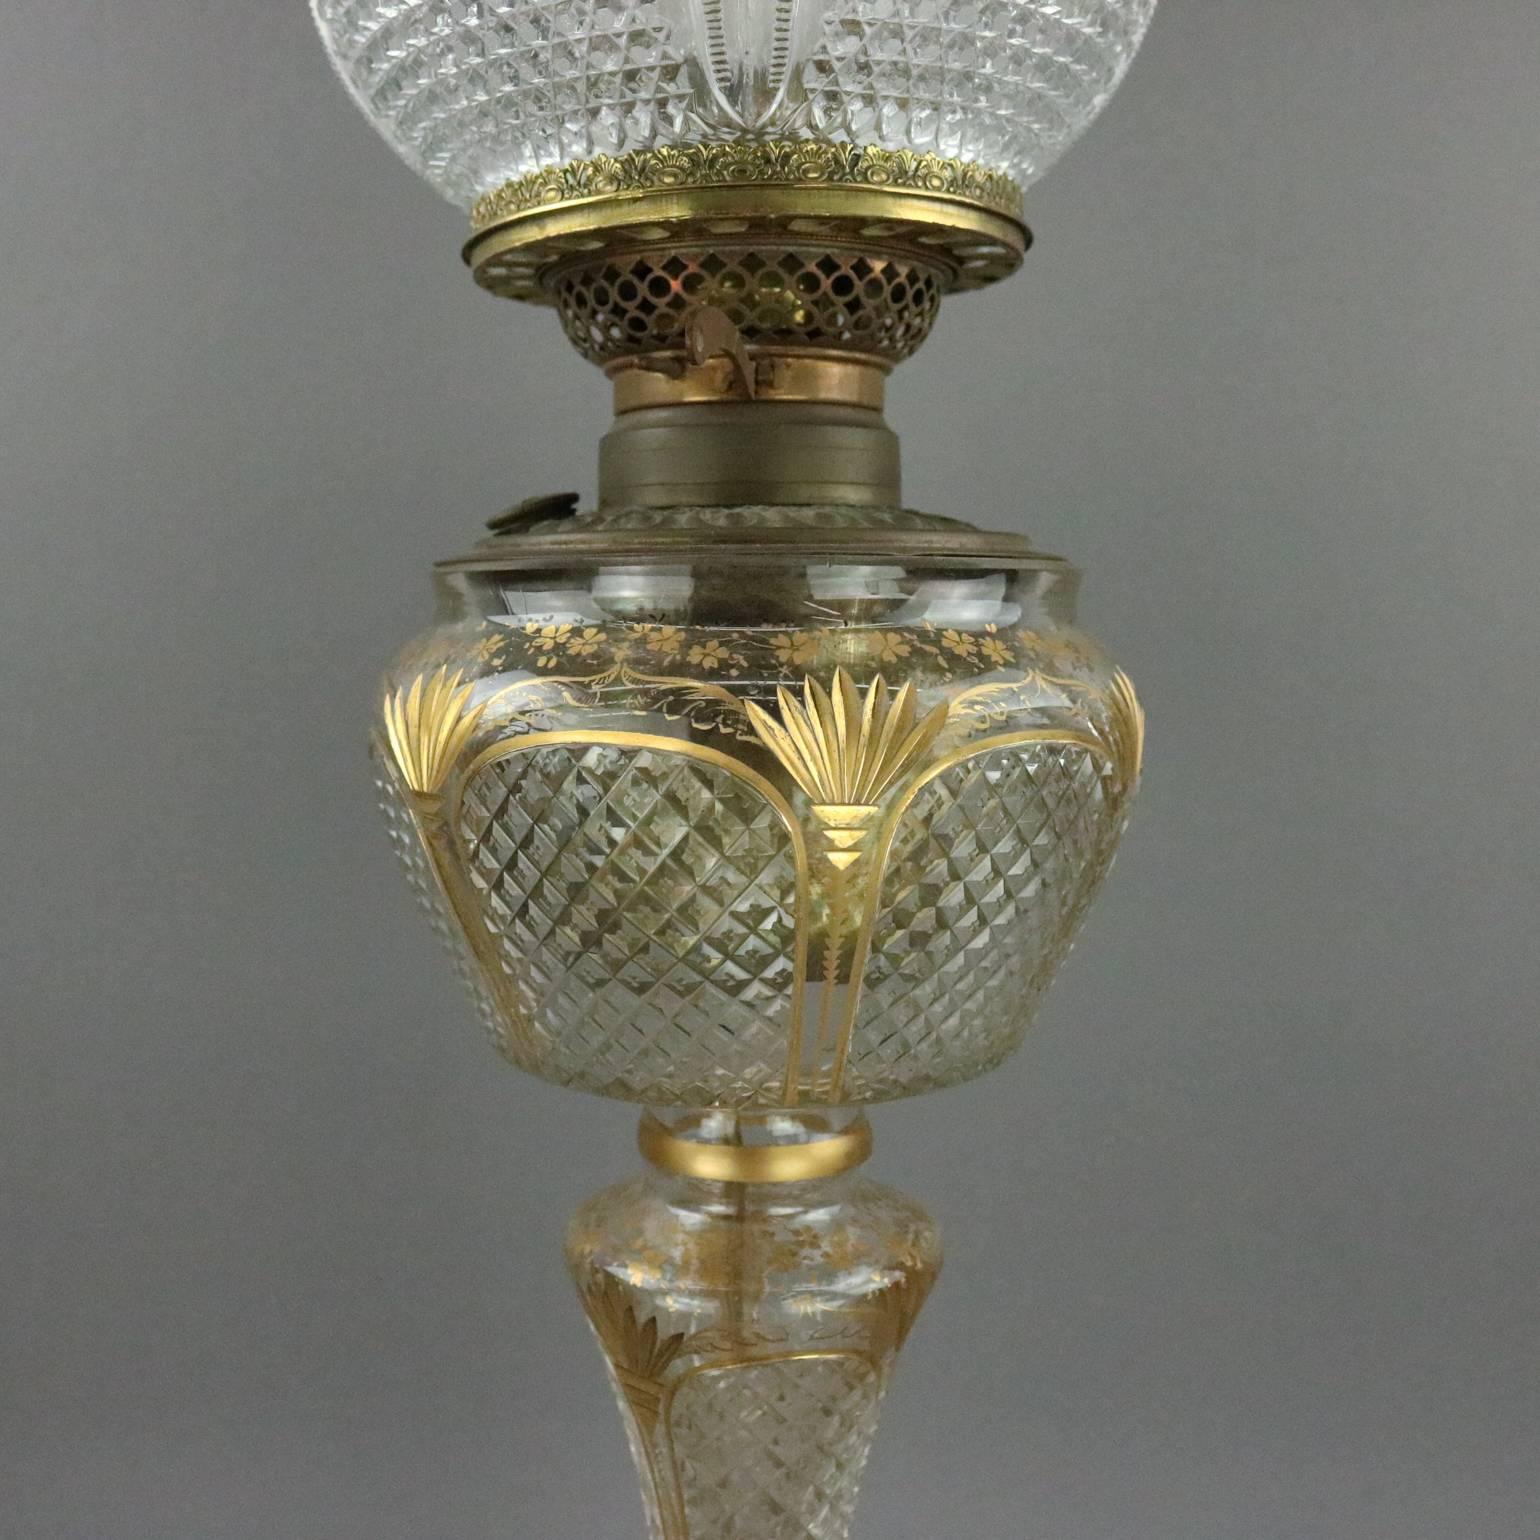 19th Century Antique Bradley & Hubbard Cut-Glass Gilt Decorated Electric Banquet Lamp